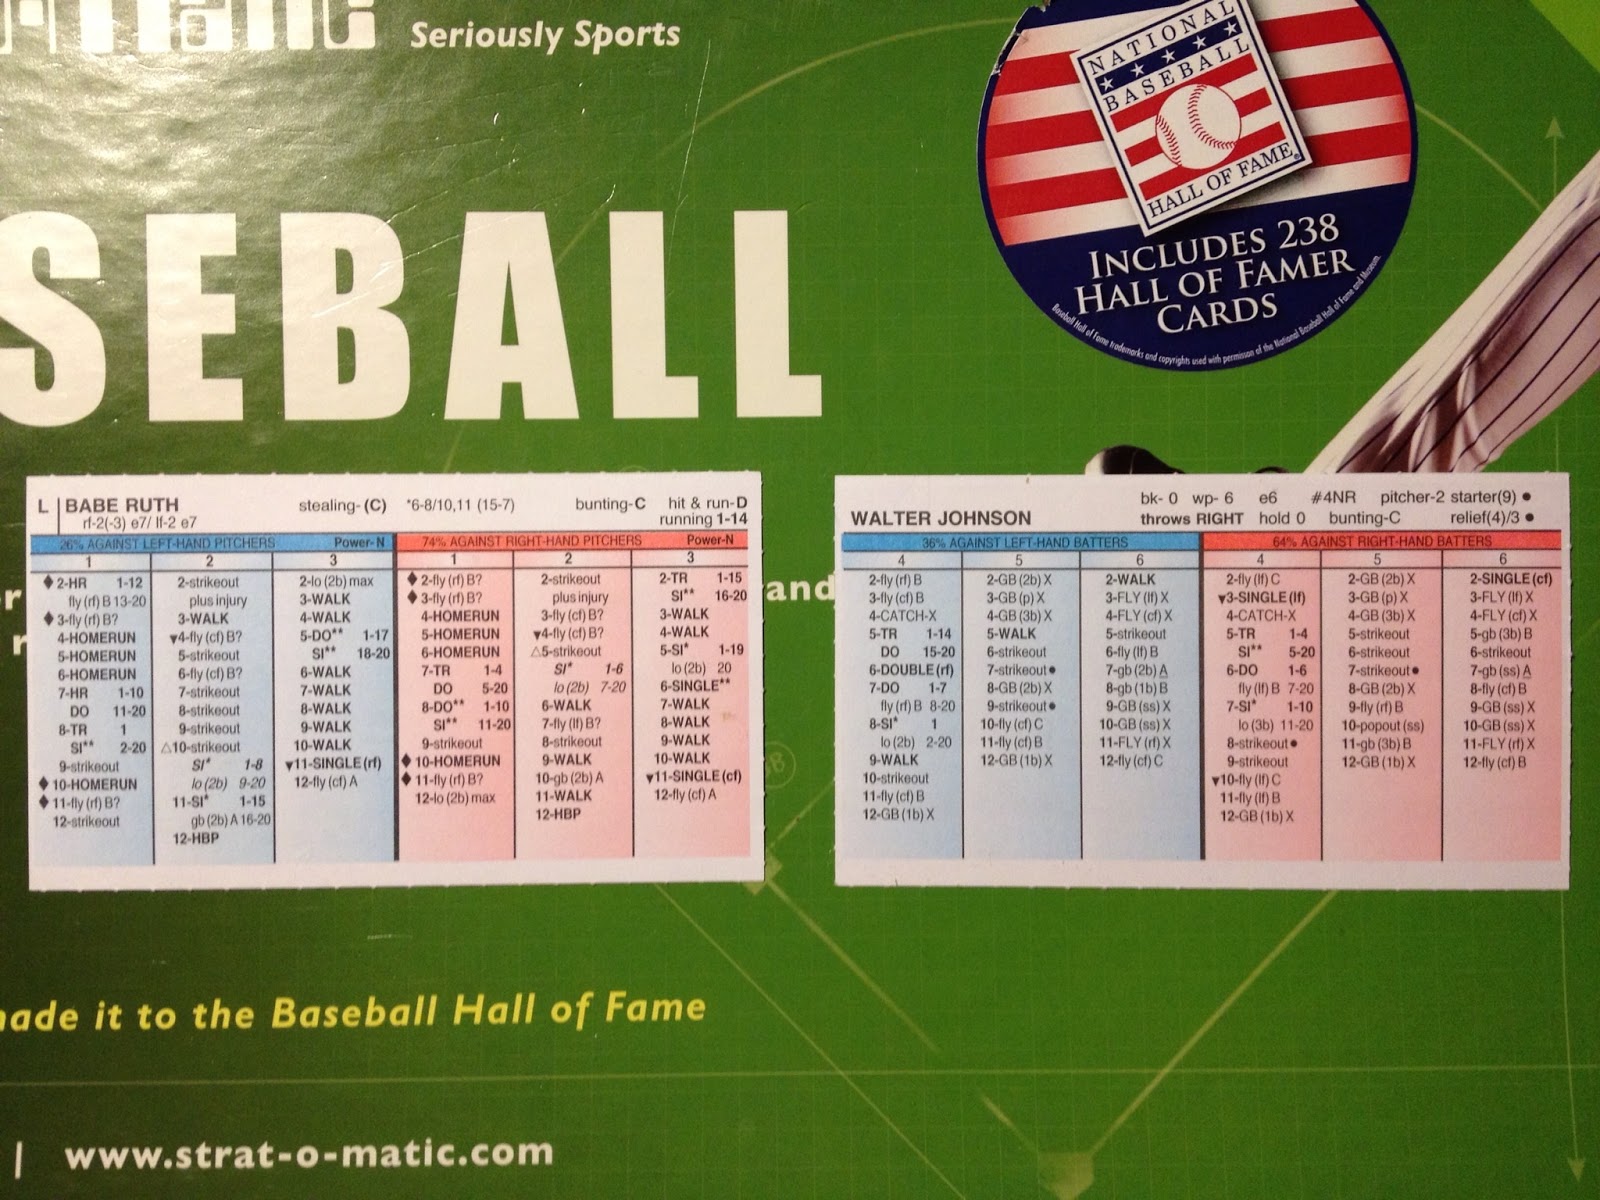 AMERICAN WARGAMERS ASSOCIATION Strat-O-Matic Baseball Board Game Review